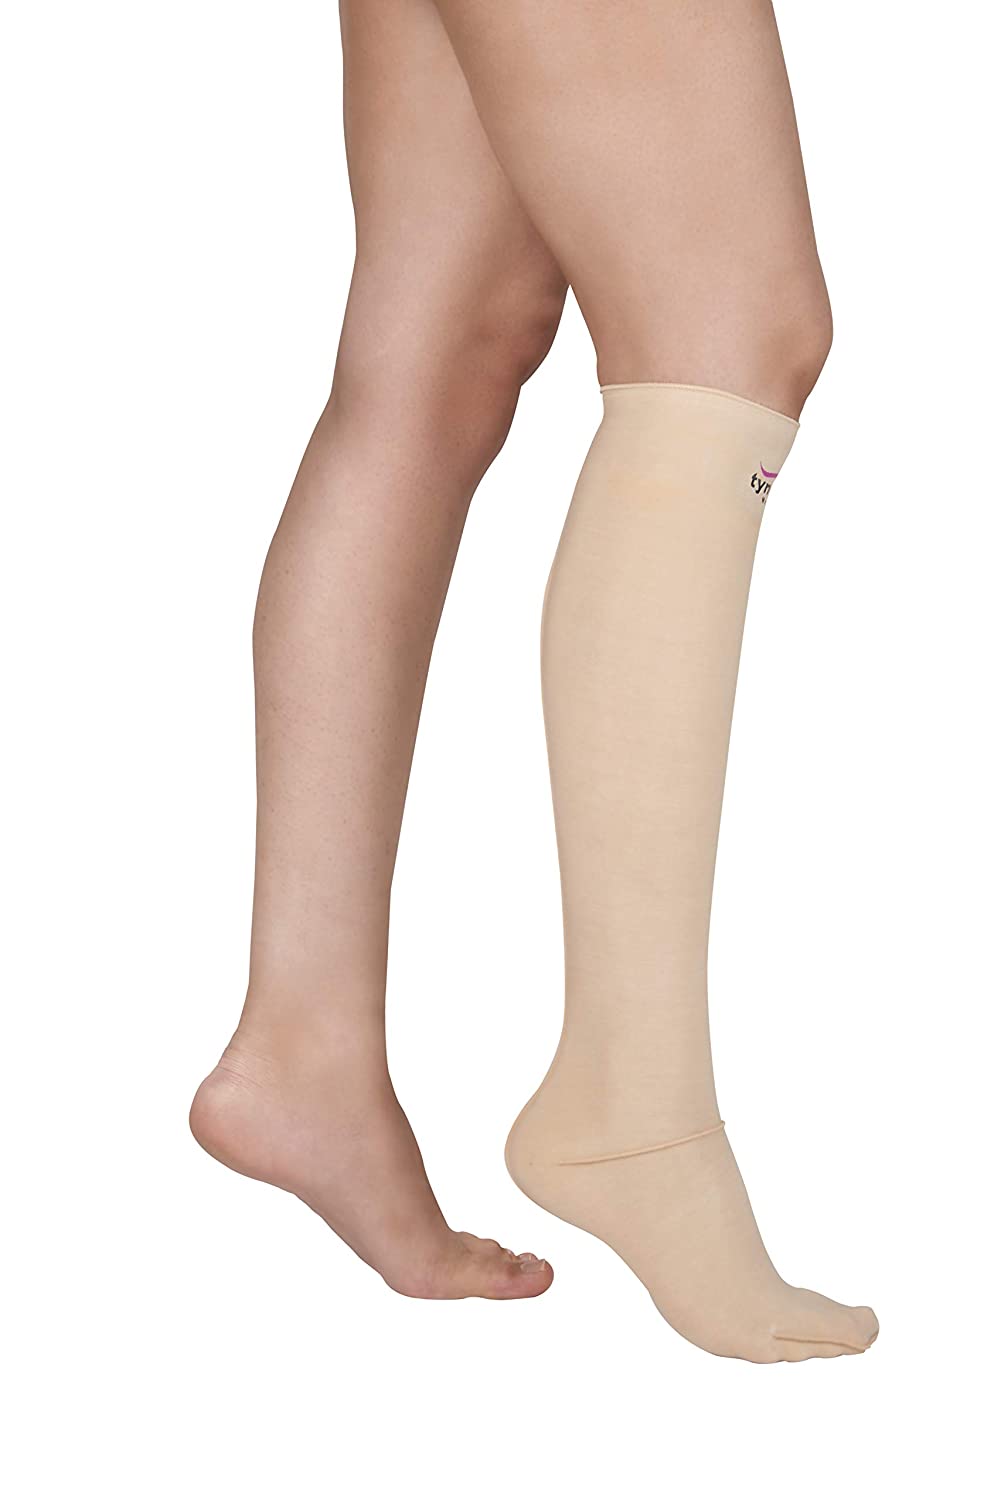 AHS Compression Stockings Leg Below Knee (Closed Toe) 20-30mmHg-1